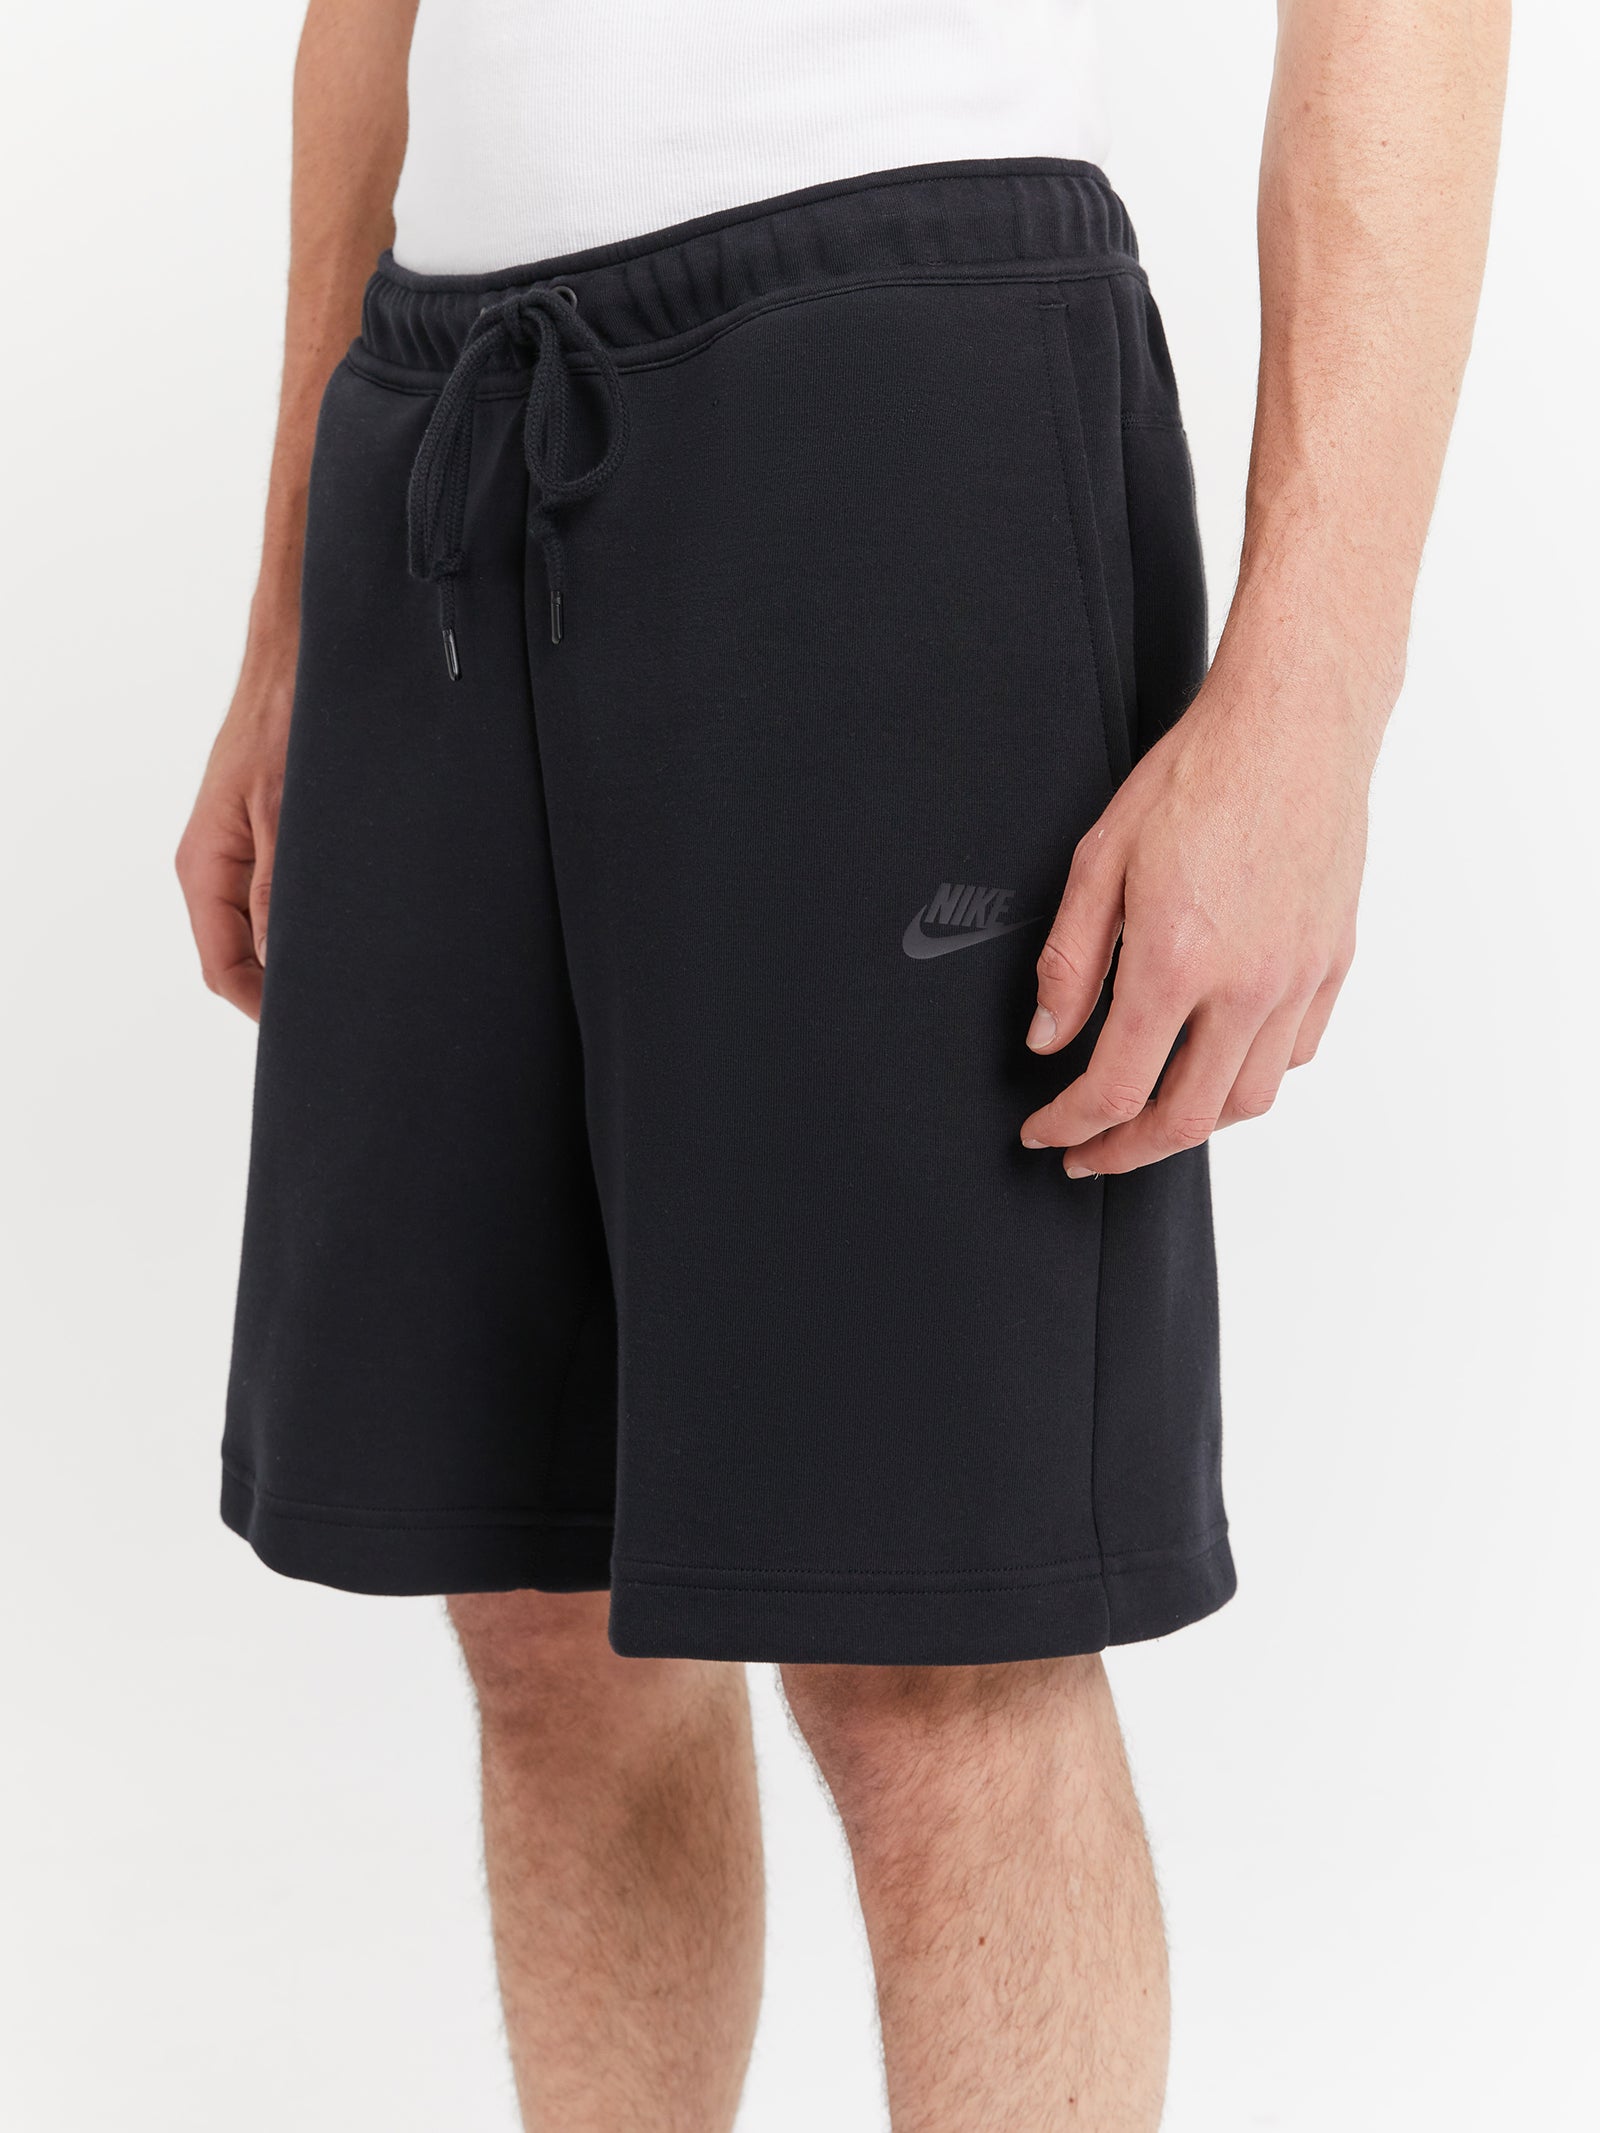 Nike Tech Fleece shorts in grey